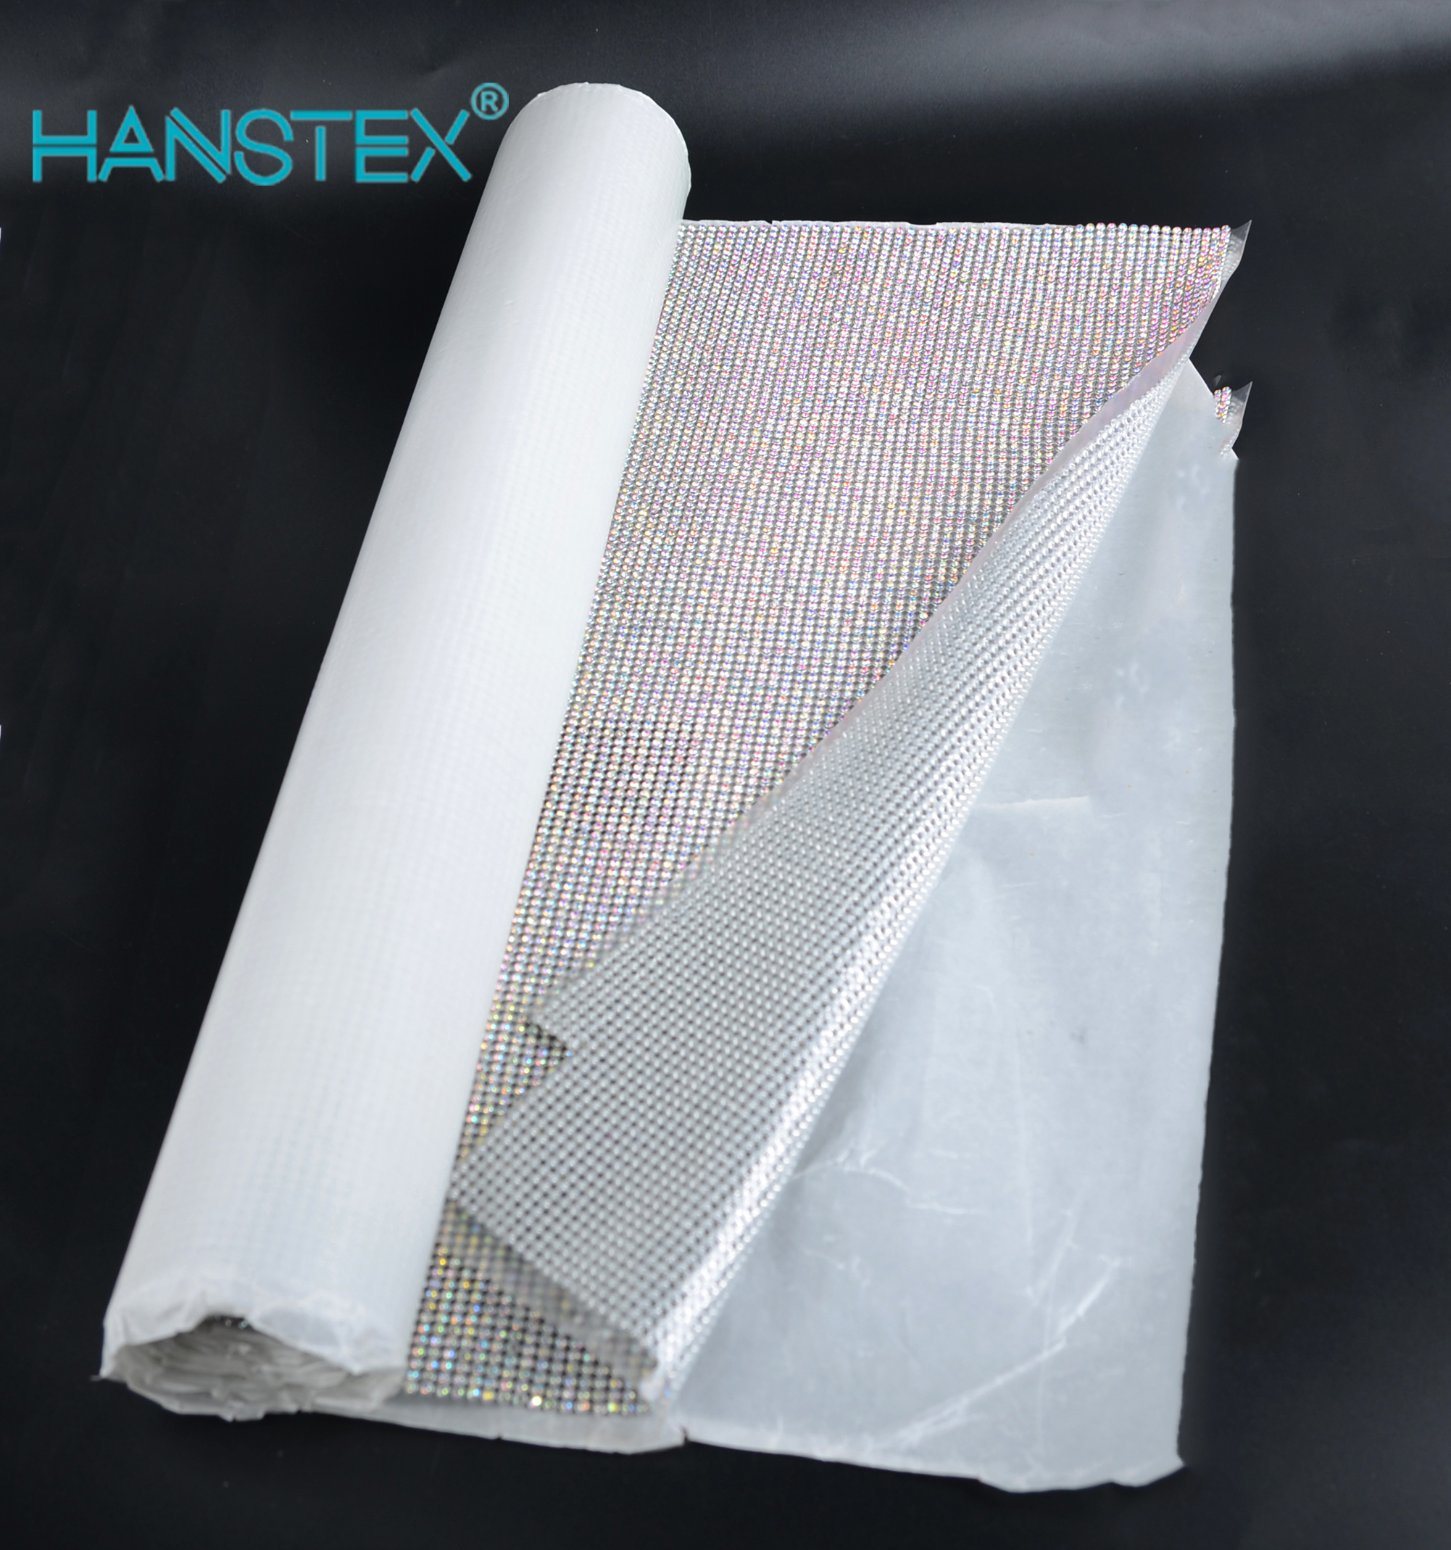 Hans Factory Hot Sales Heat Transfer Adhesive Crystal Resin Rhinestone Mesh